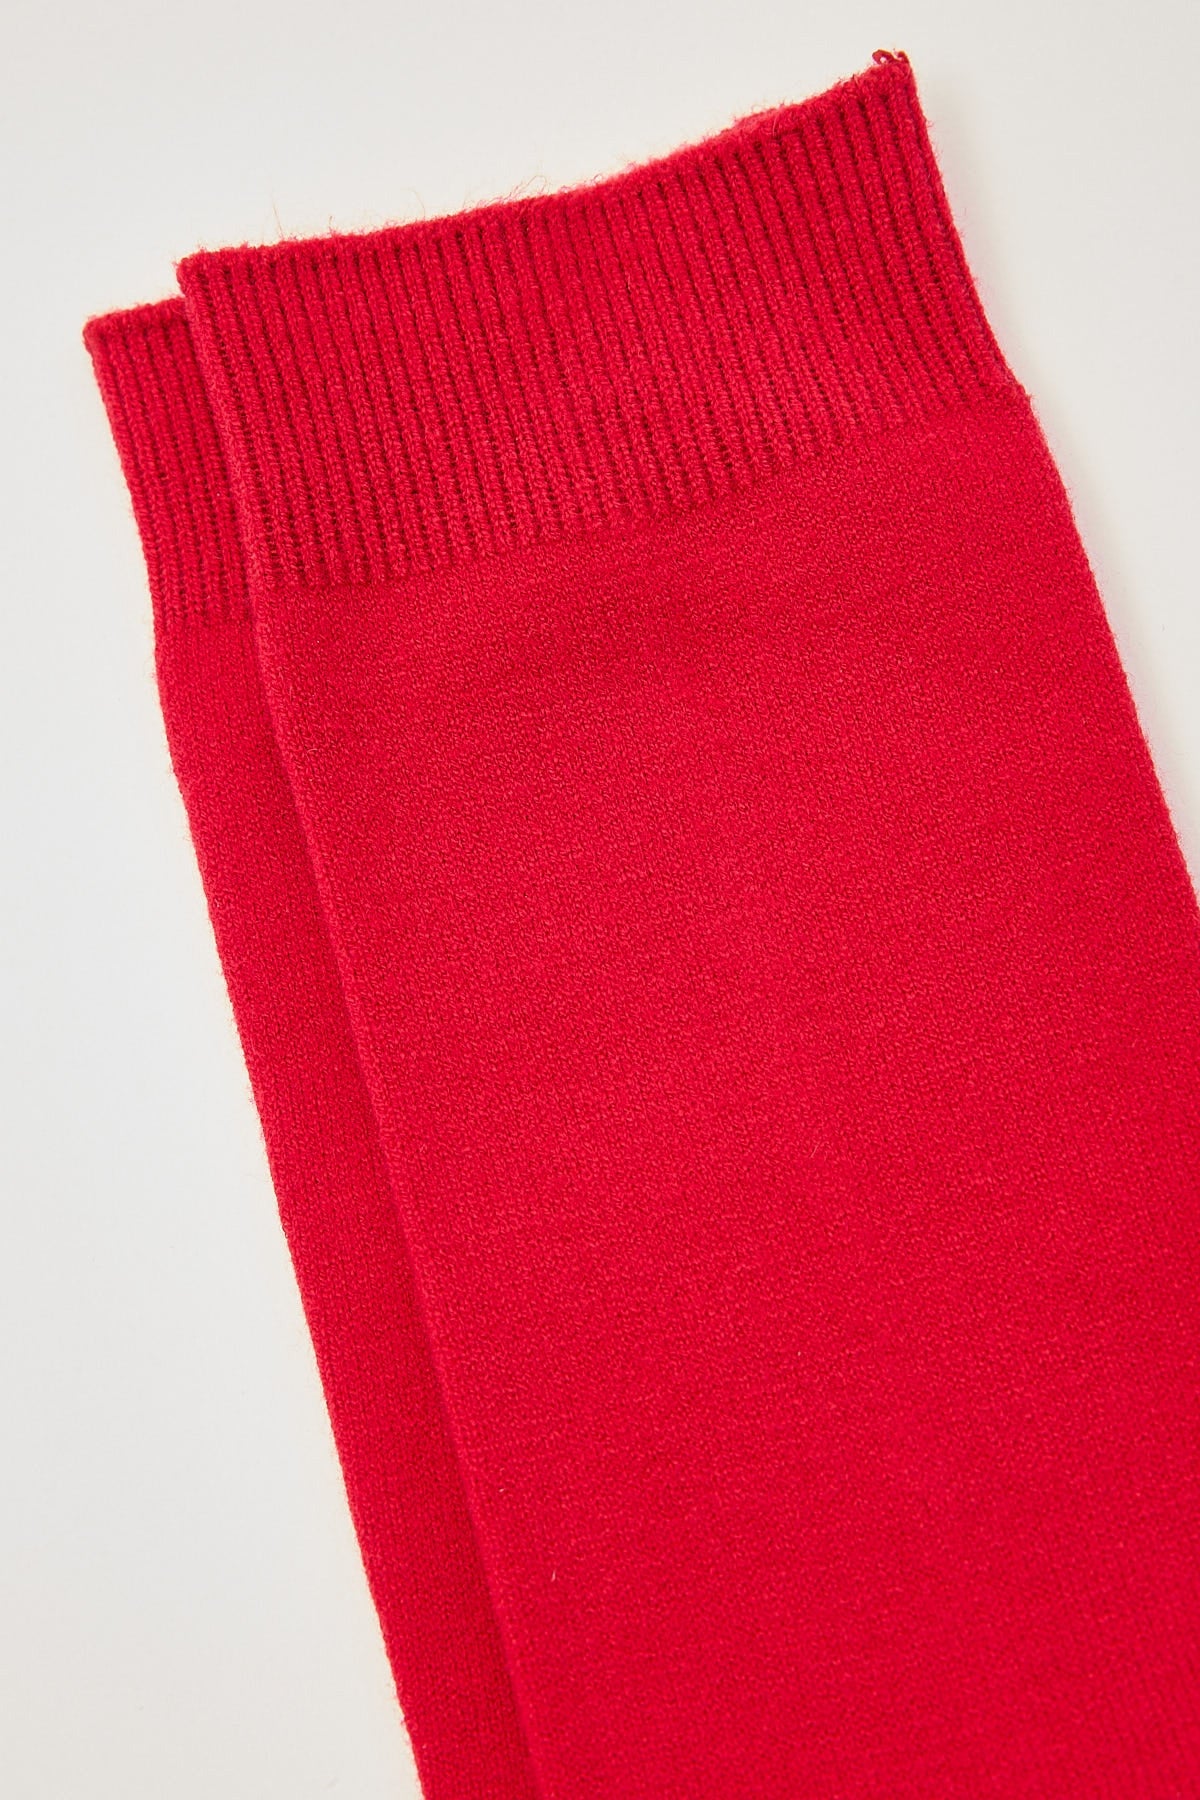 Token Scarlet Socks Red